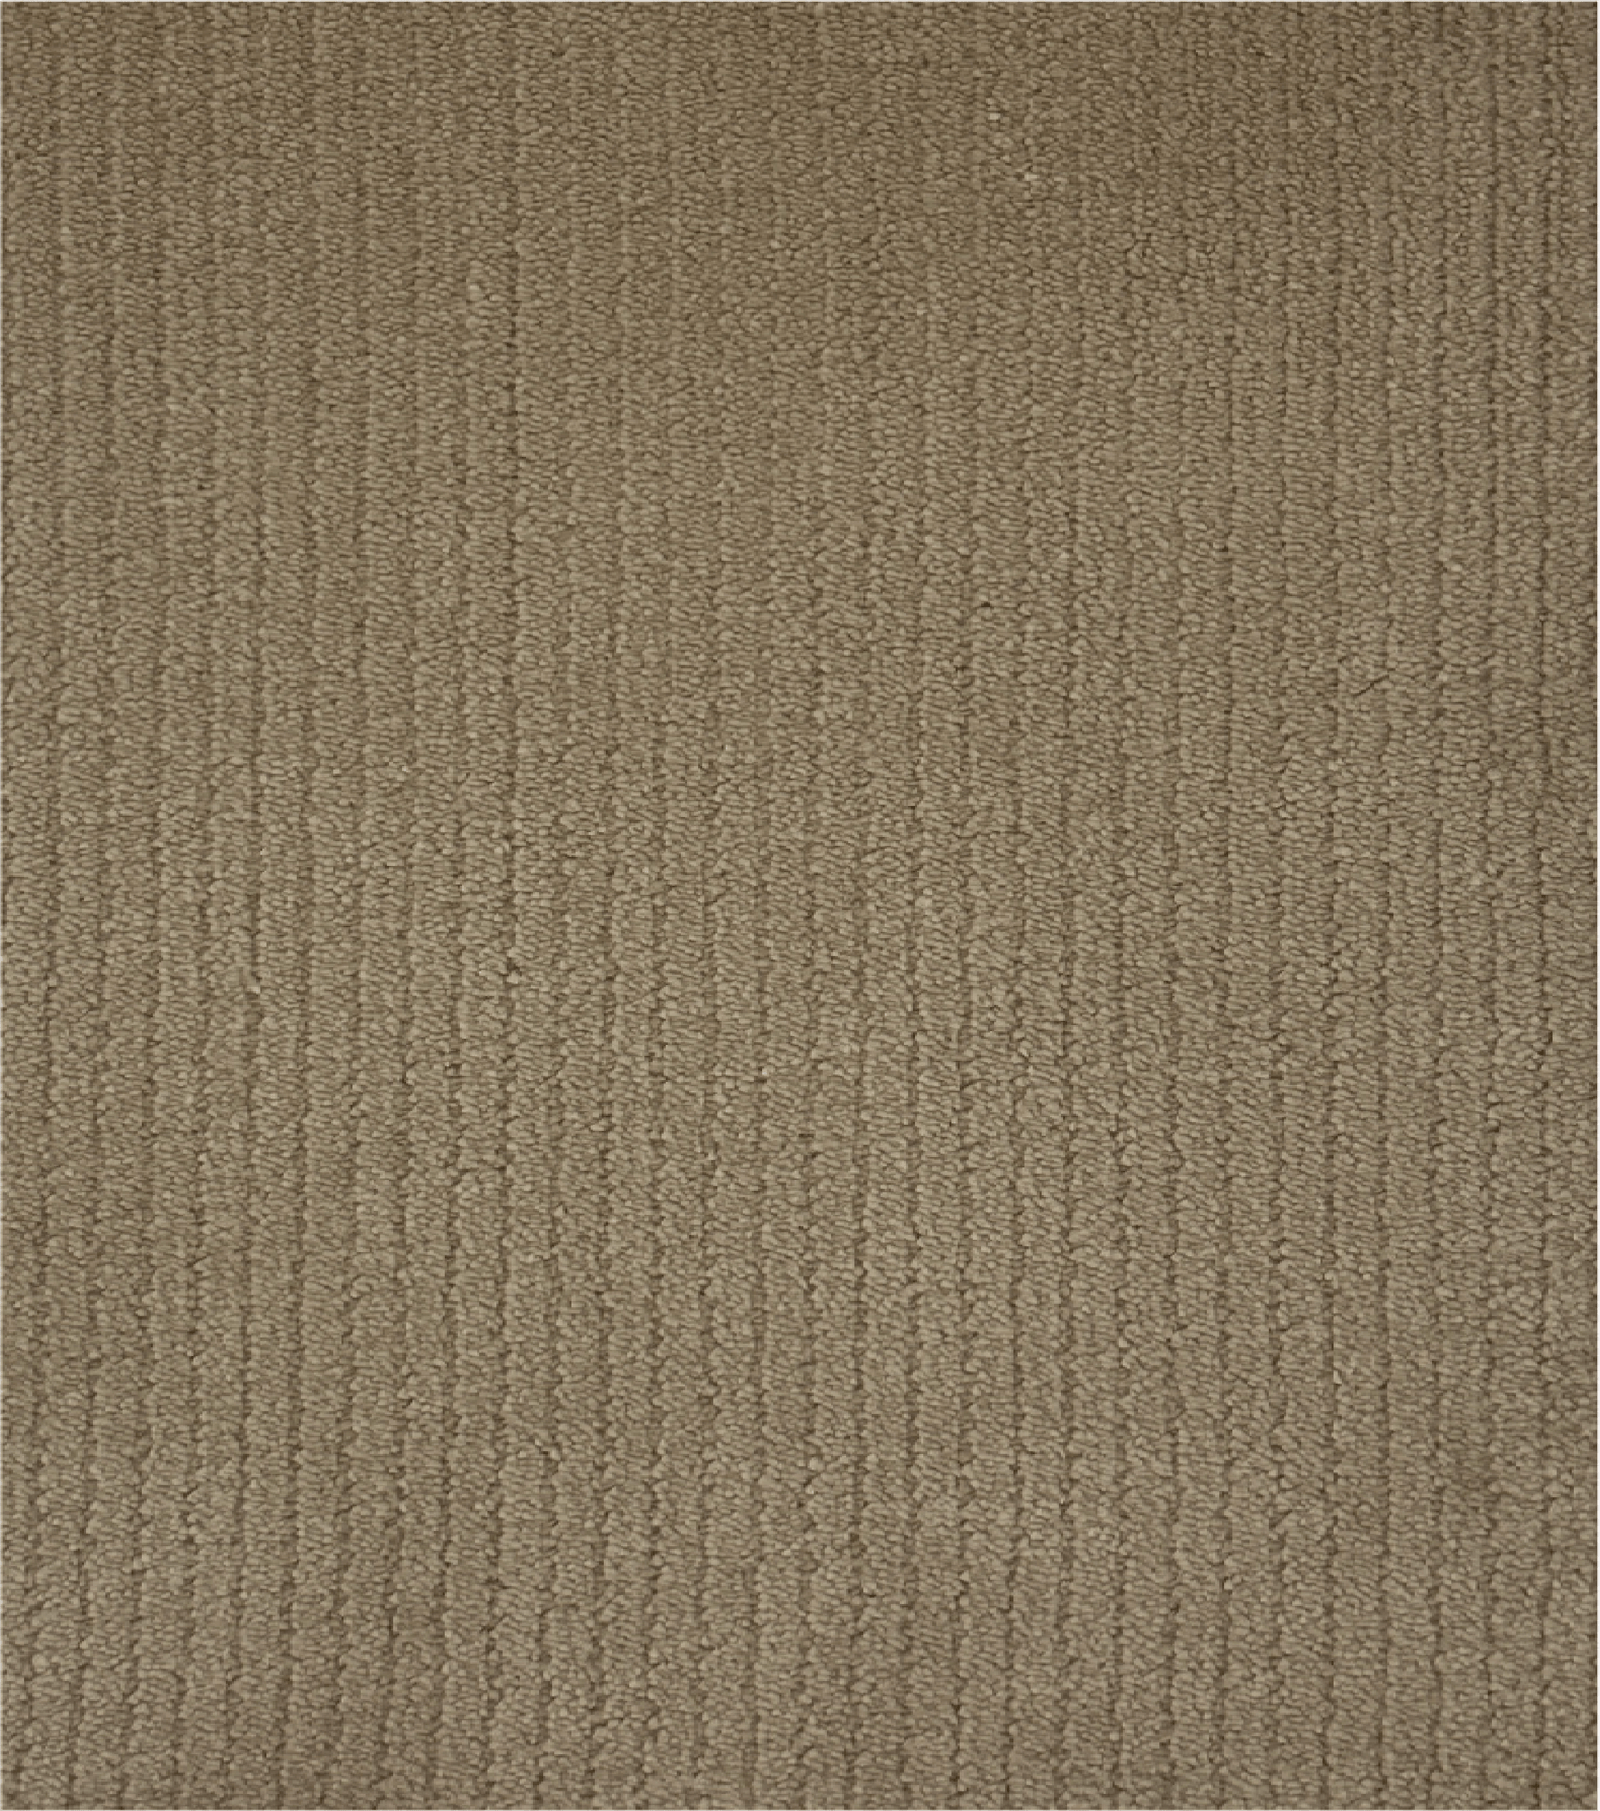 Cut Pile Carpet-AVRASYA